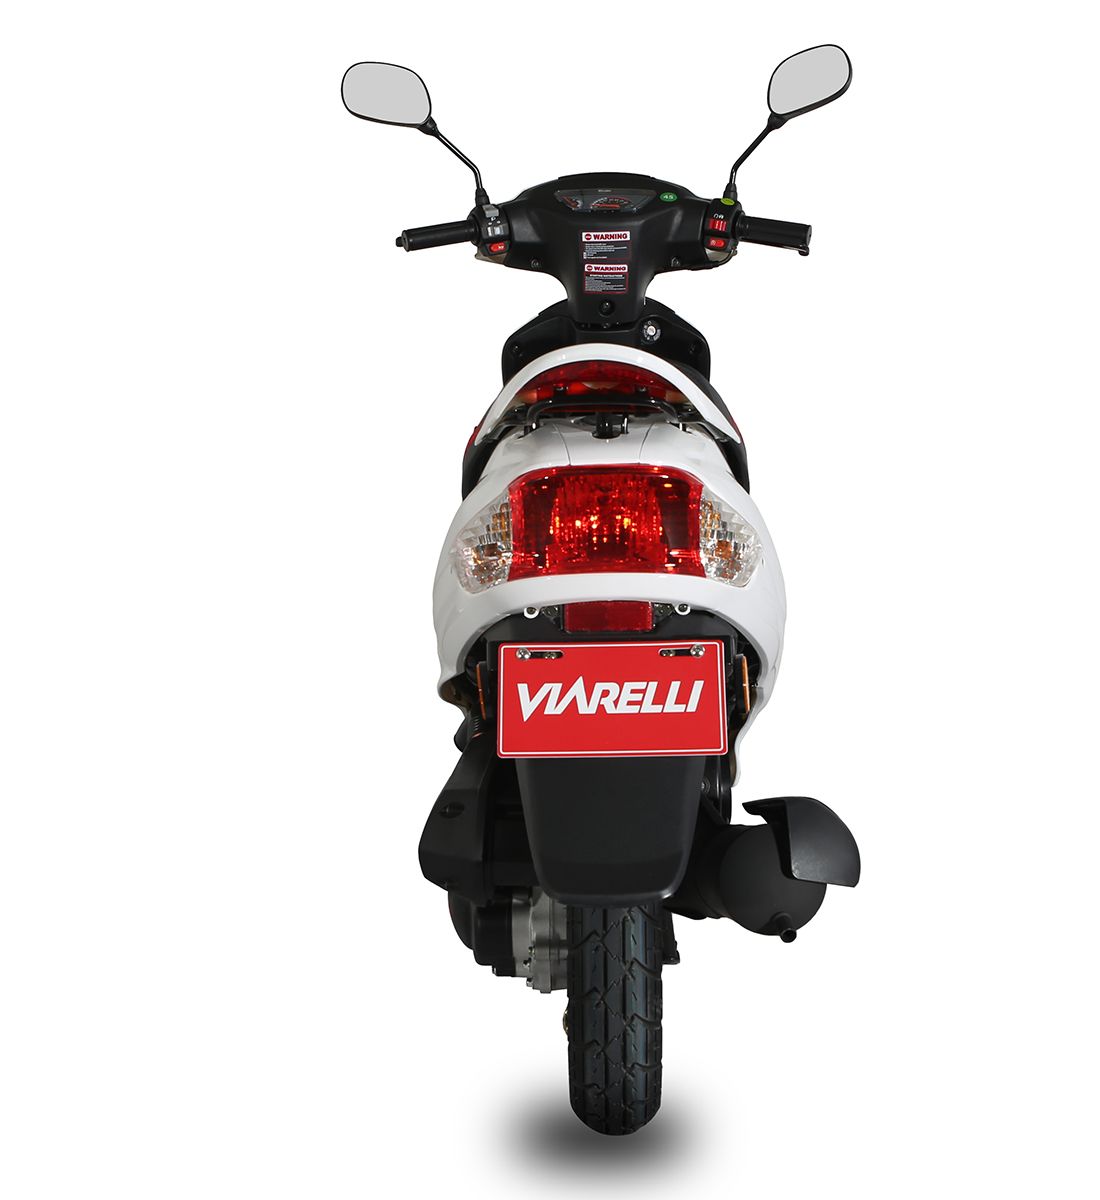 Viarelli Enzo Klass 1 vit moped